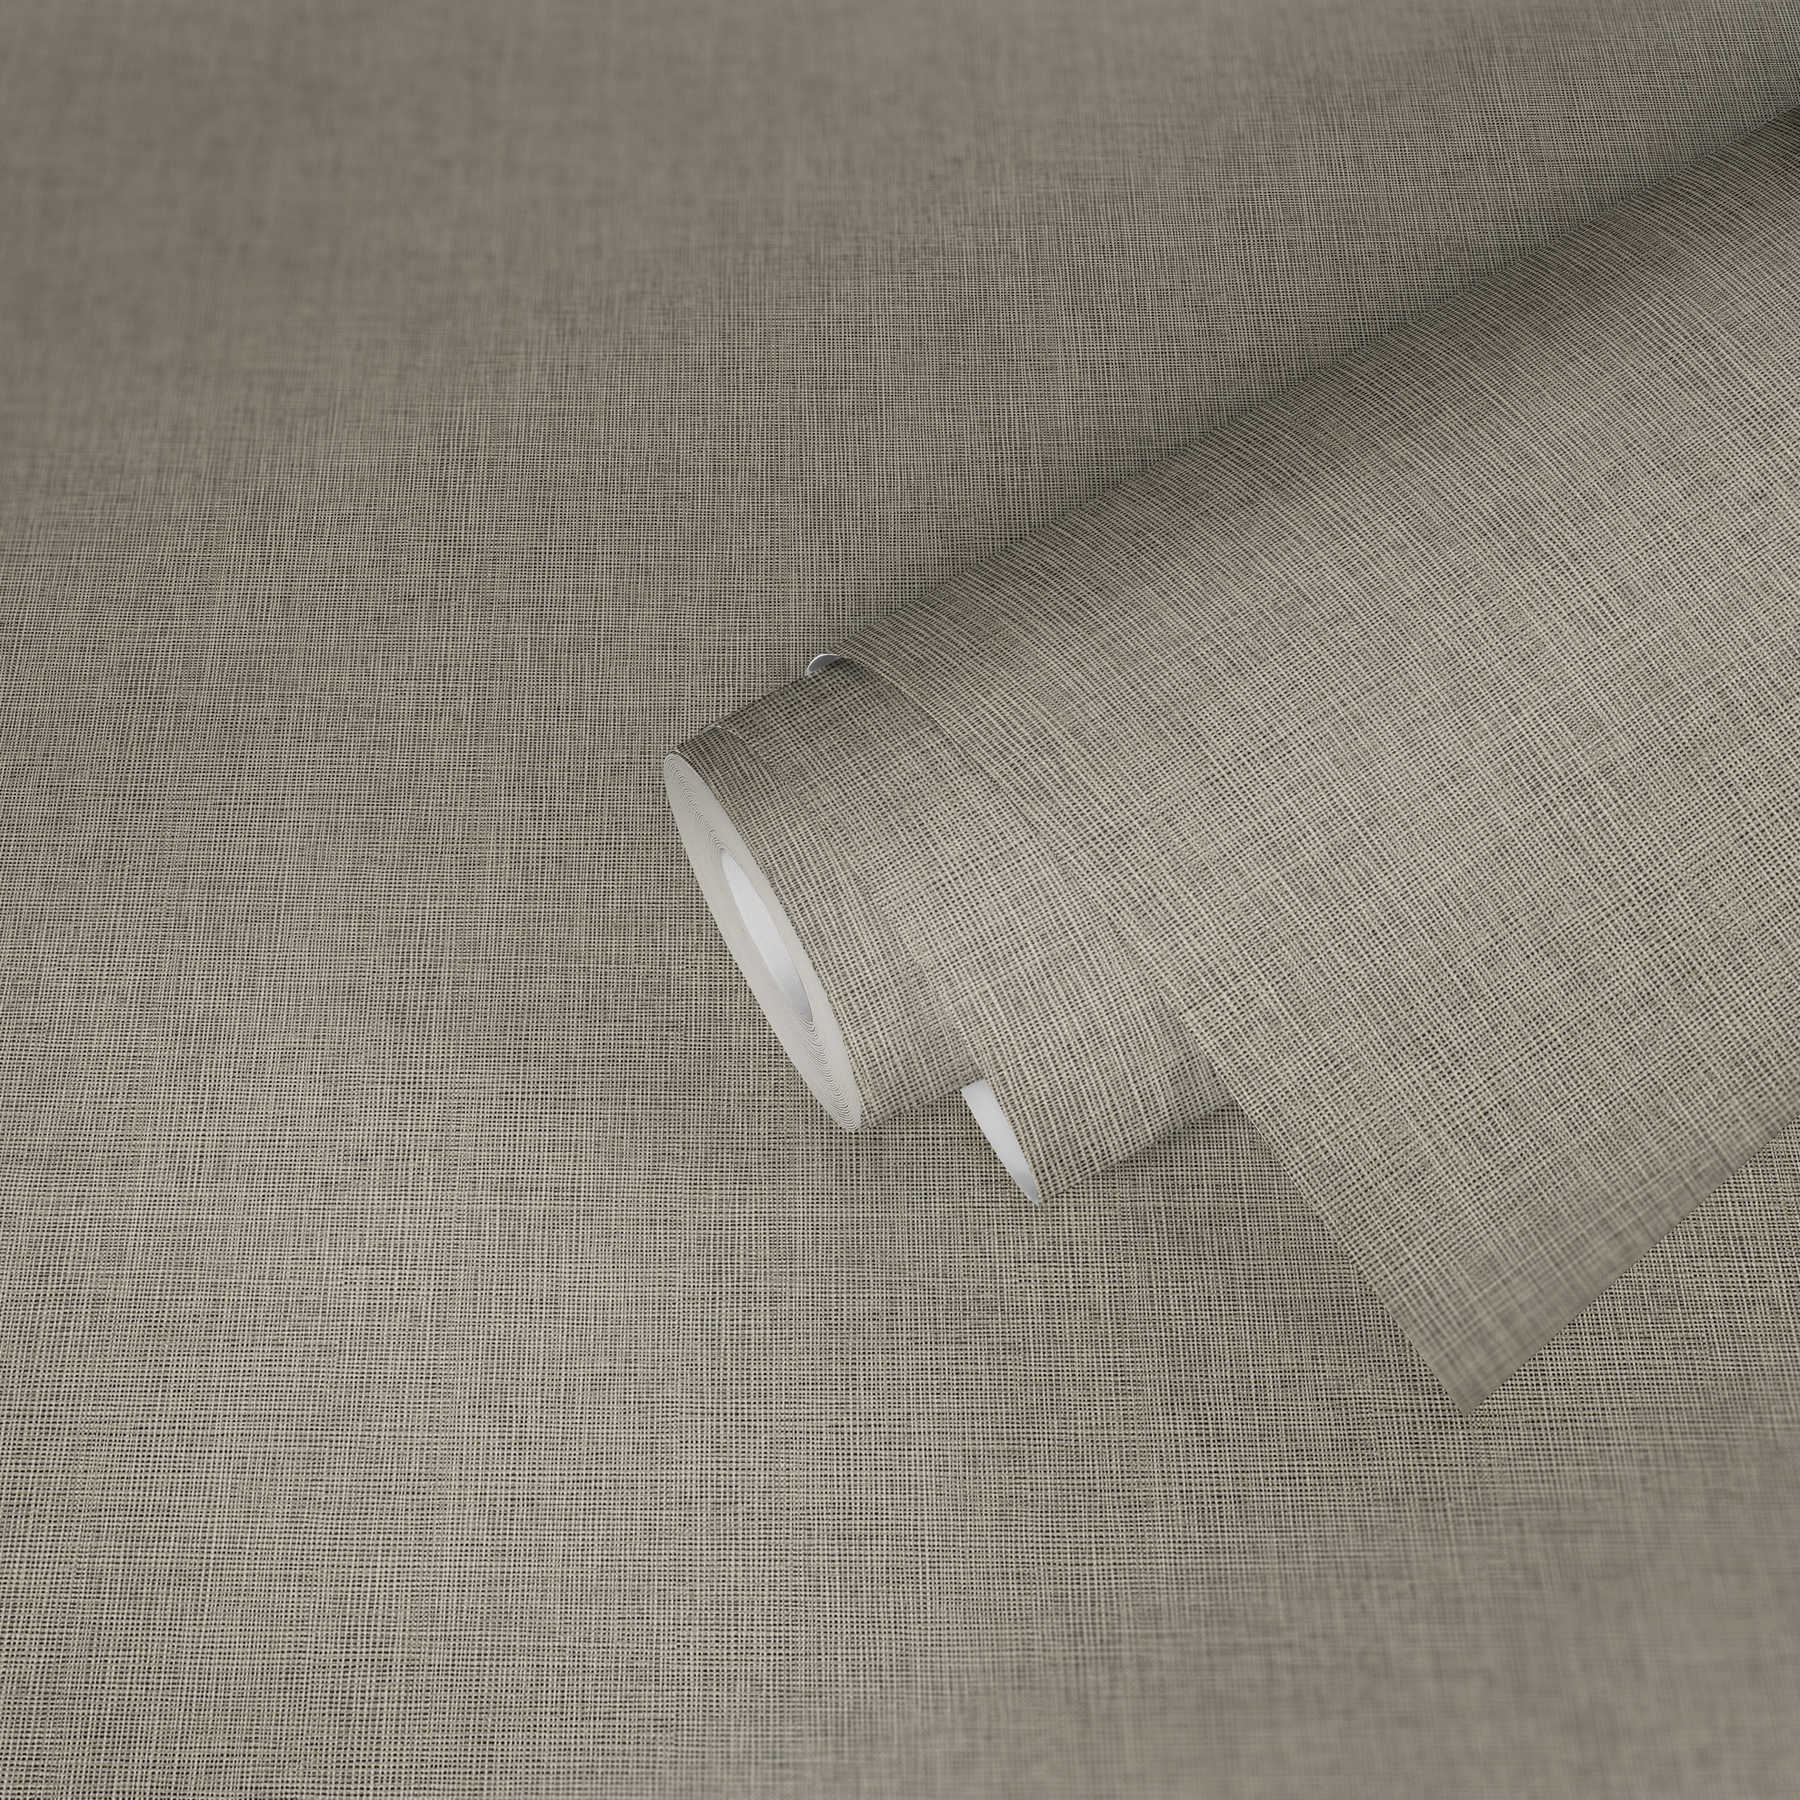             Unitapete im Textil Look mit Silber Metallic Details – Blau, Grau, Silber
        